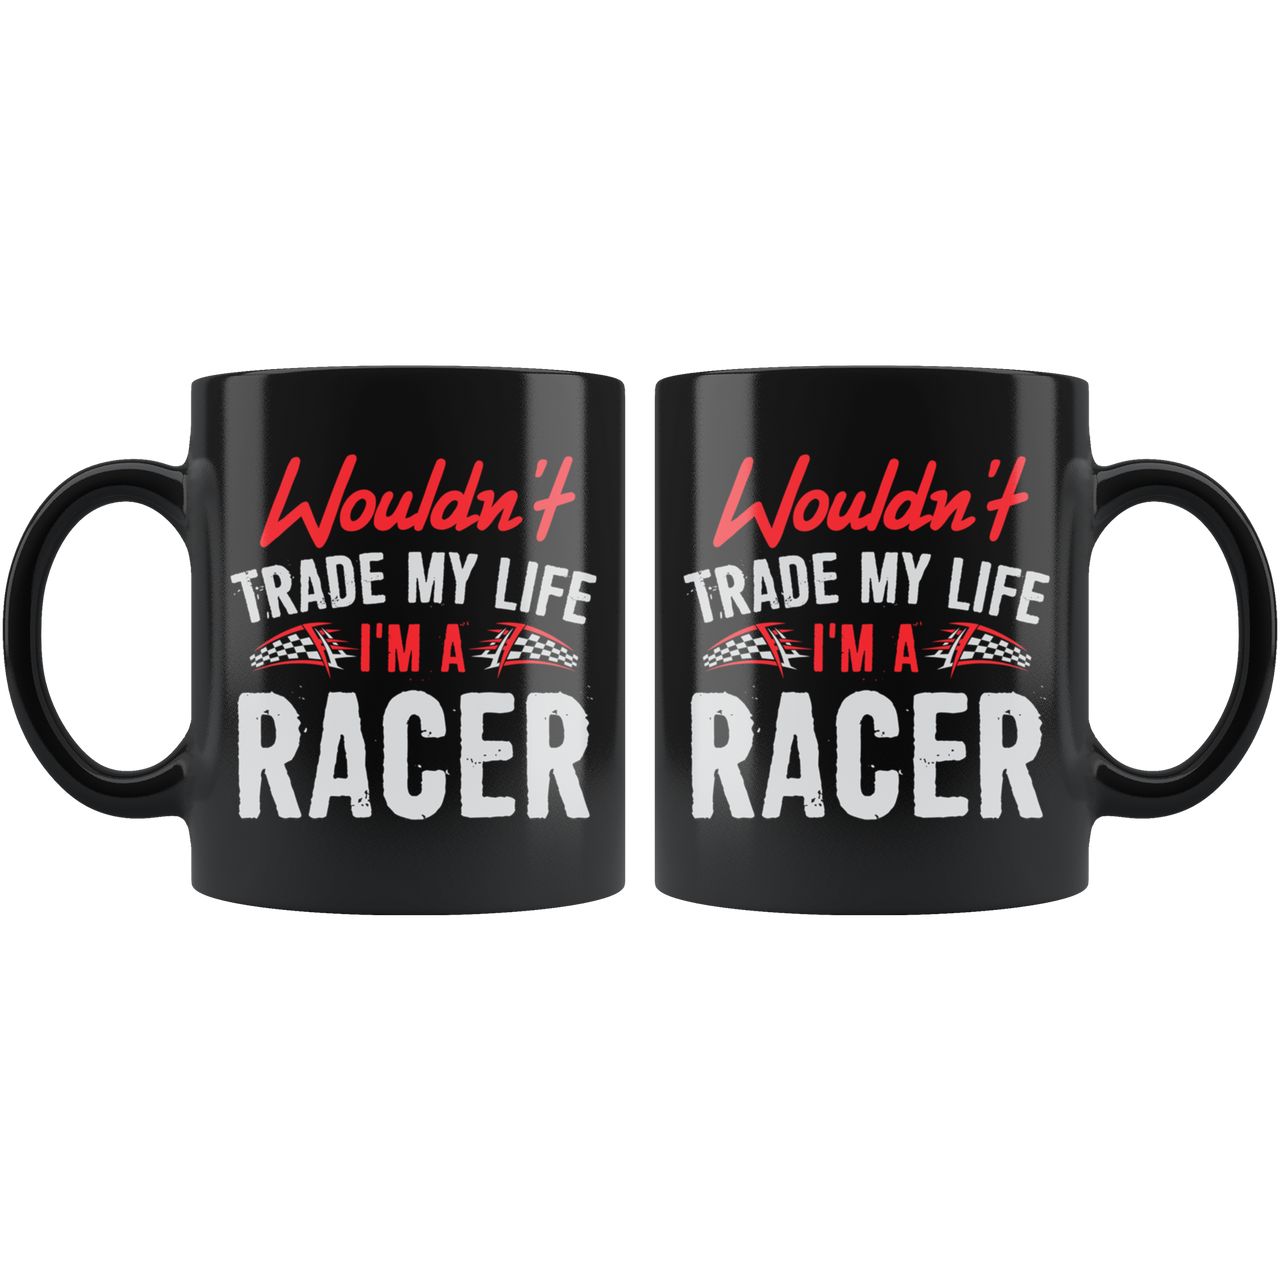 Wouldn't Trade My Life I'm A Racer Mug!